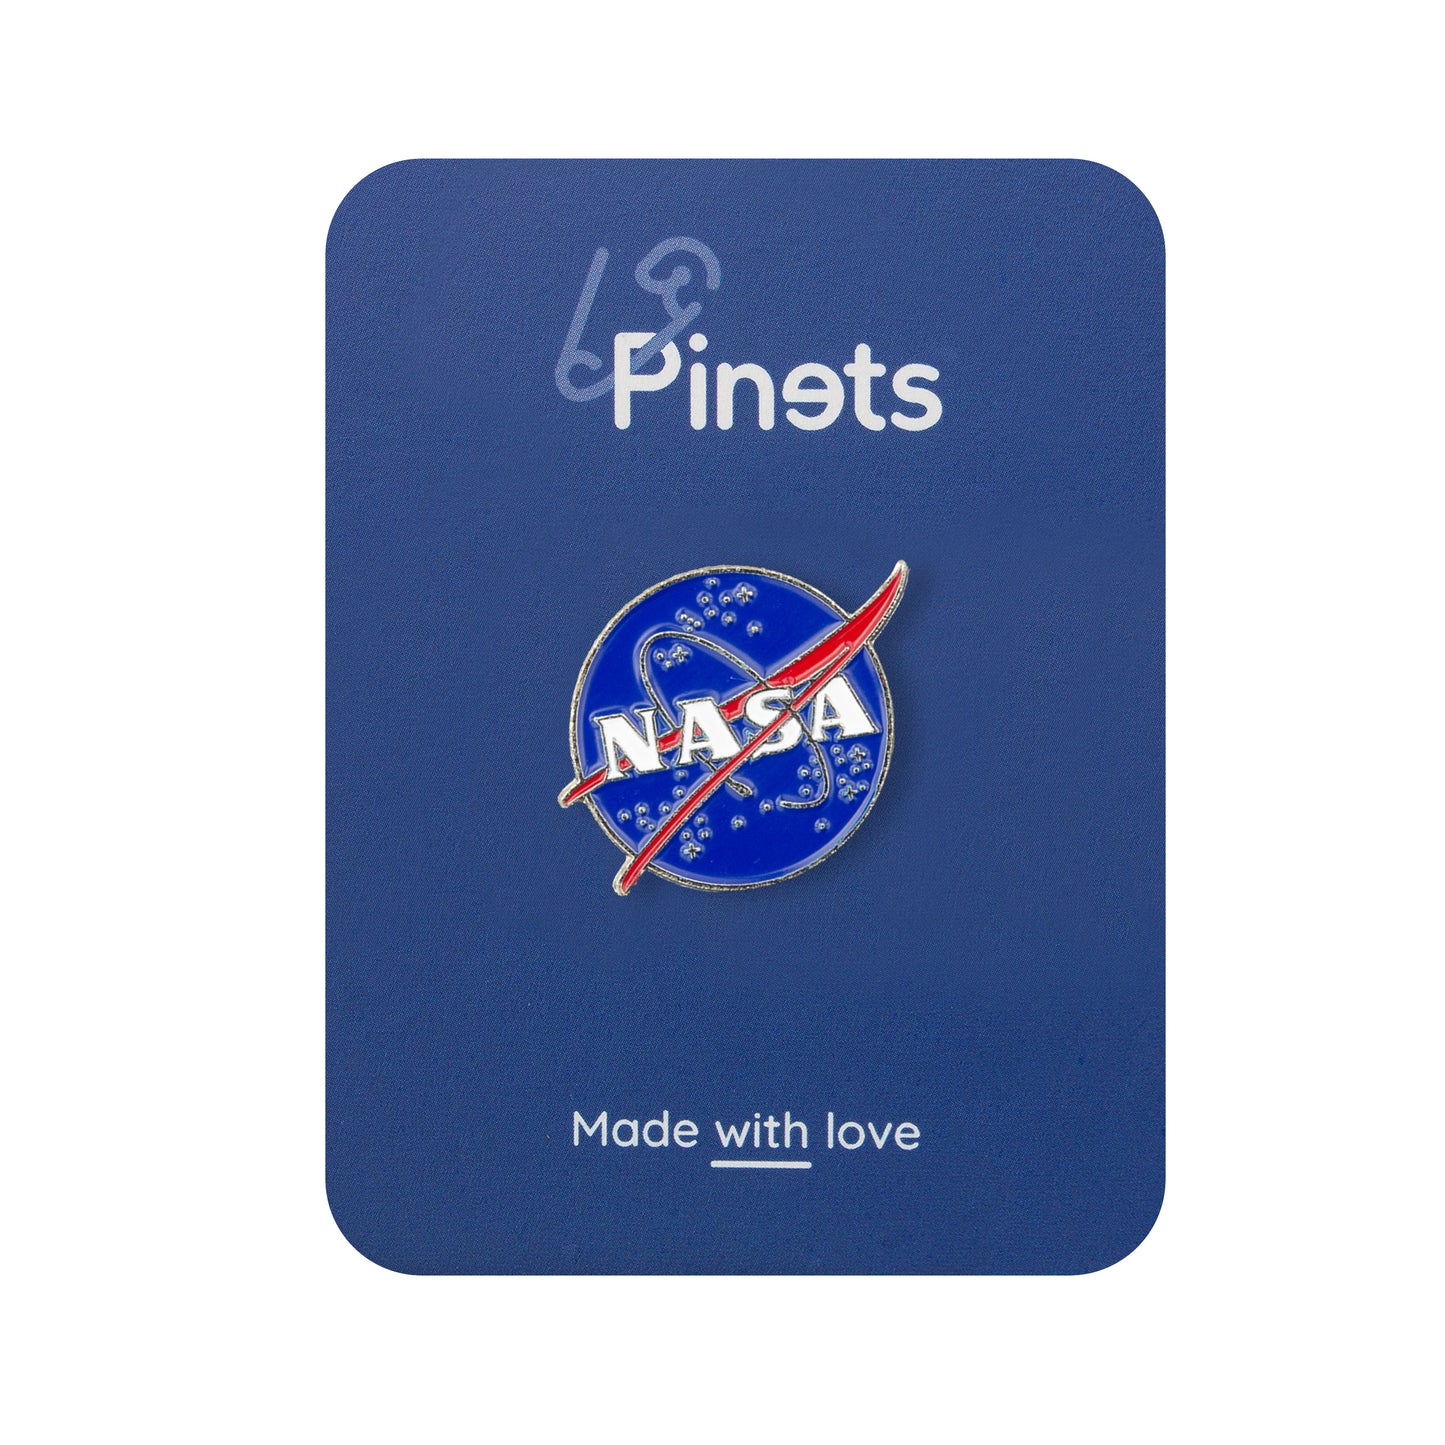 NASA logo emaliowana przypinka - Pinets Polska